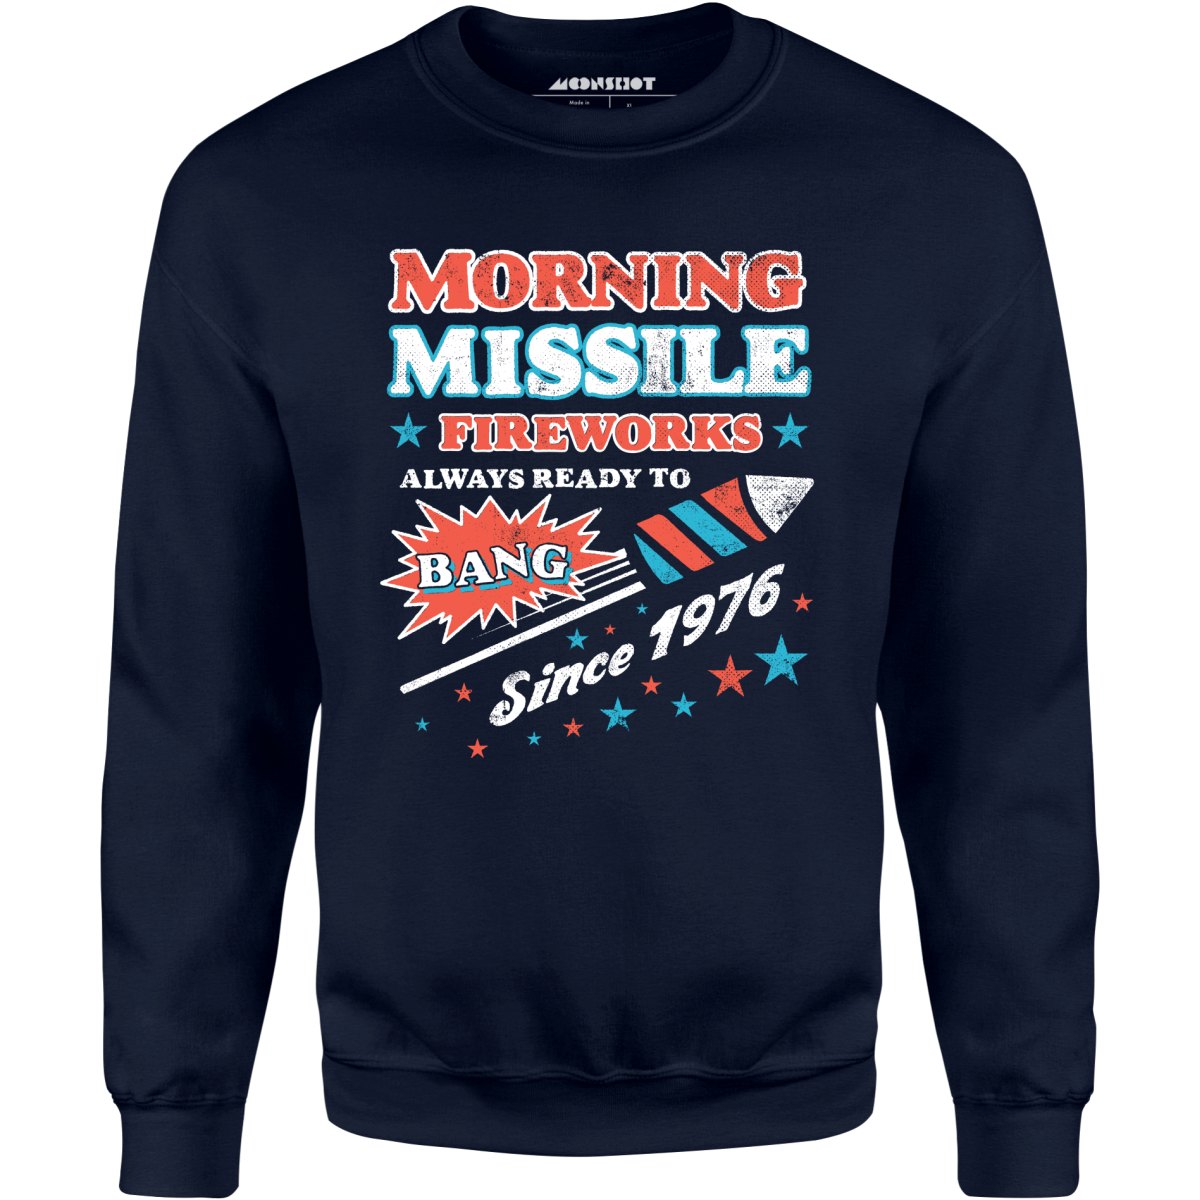 Morning Missile Fireworks - Unisex Sweatshirt